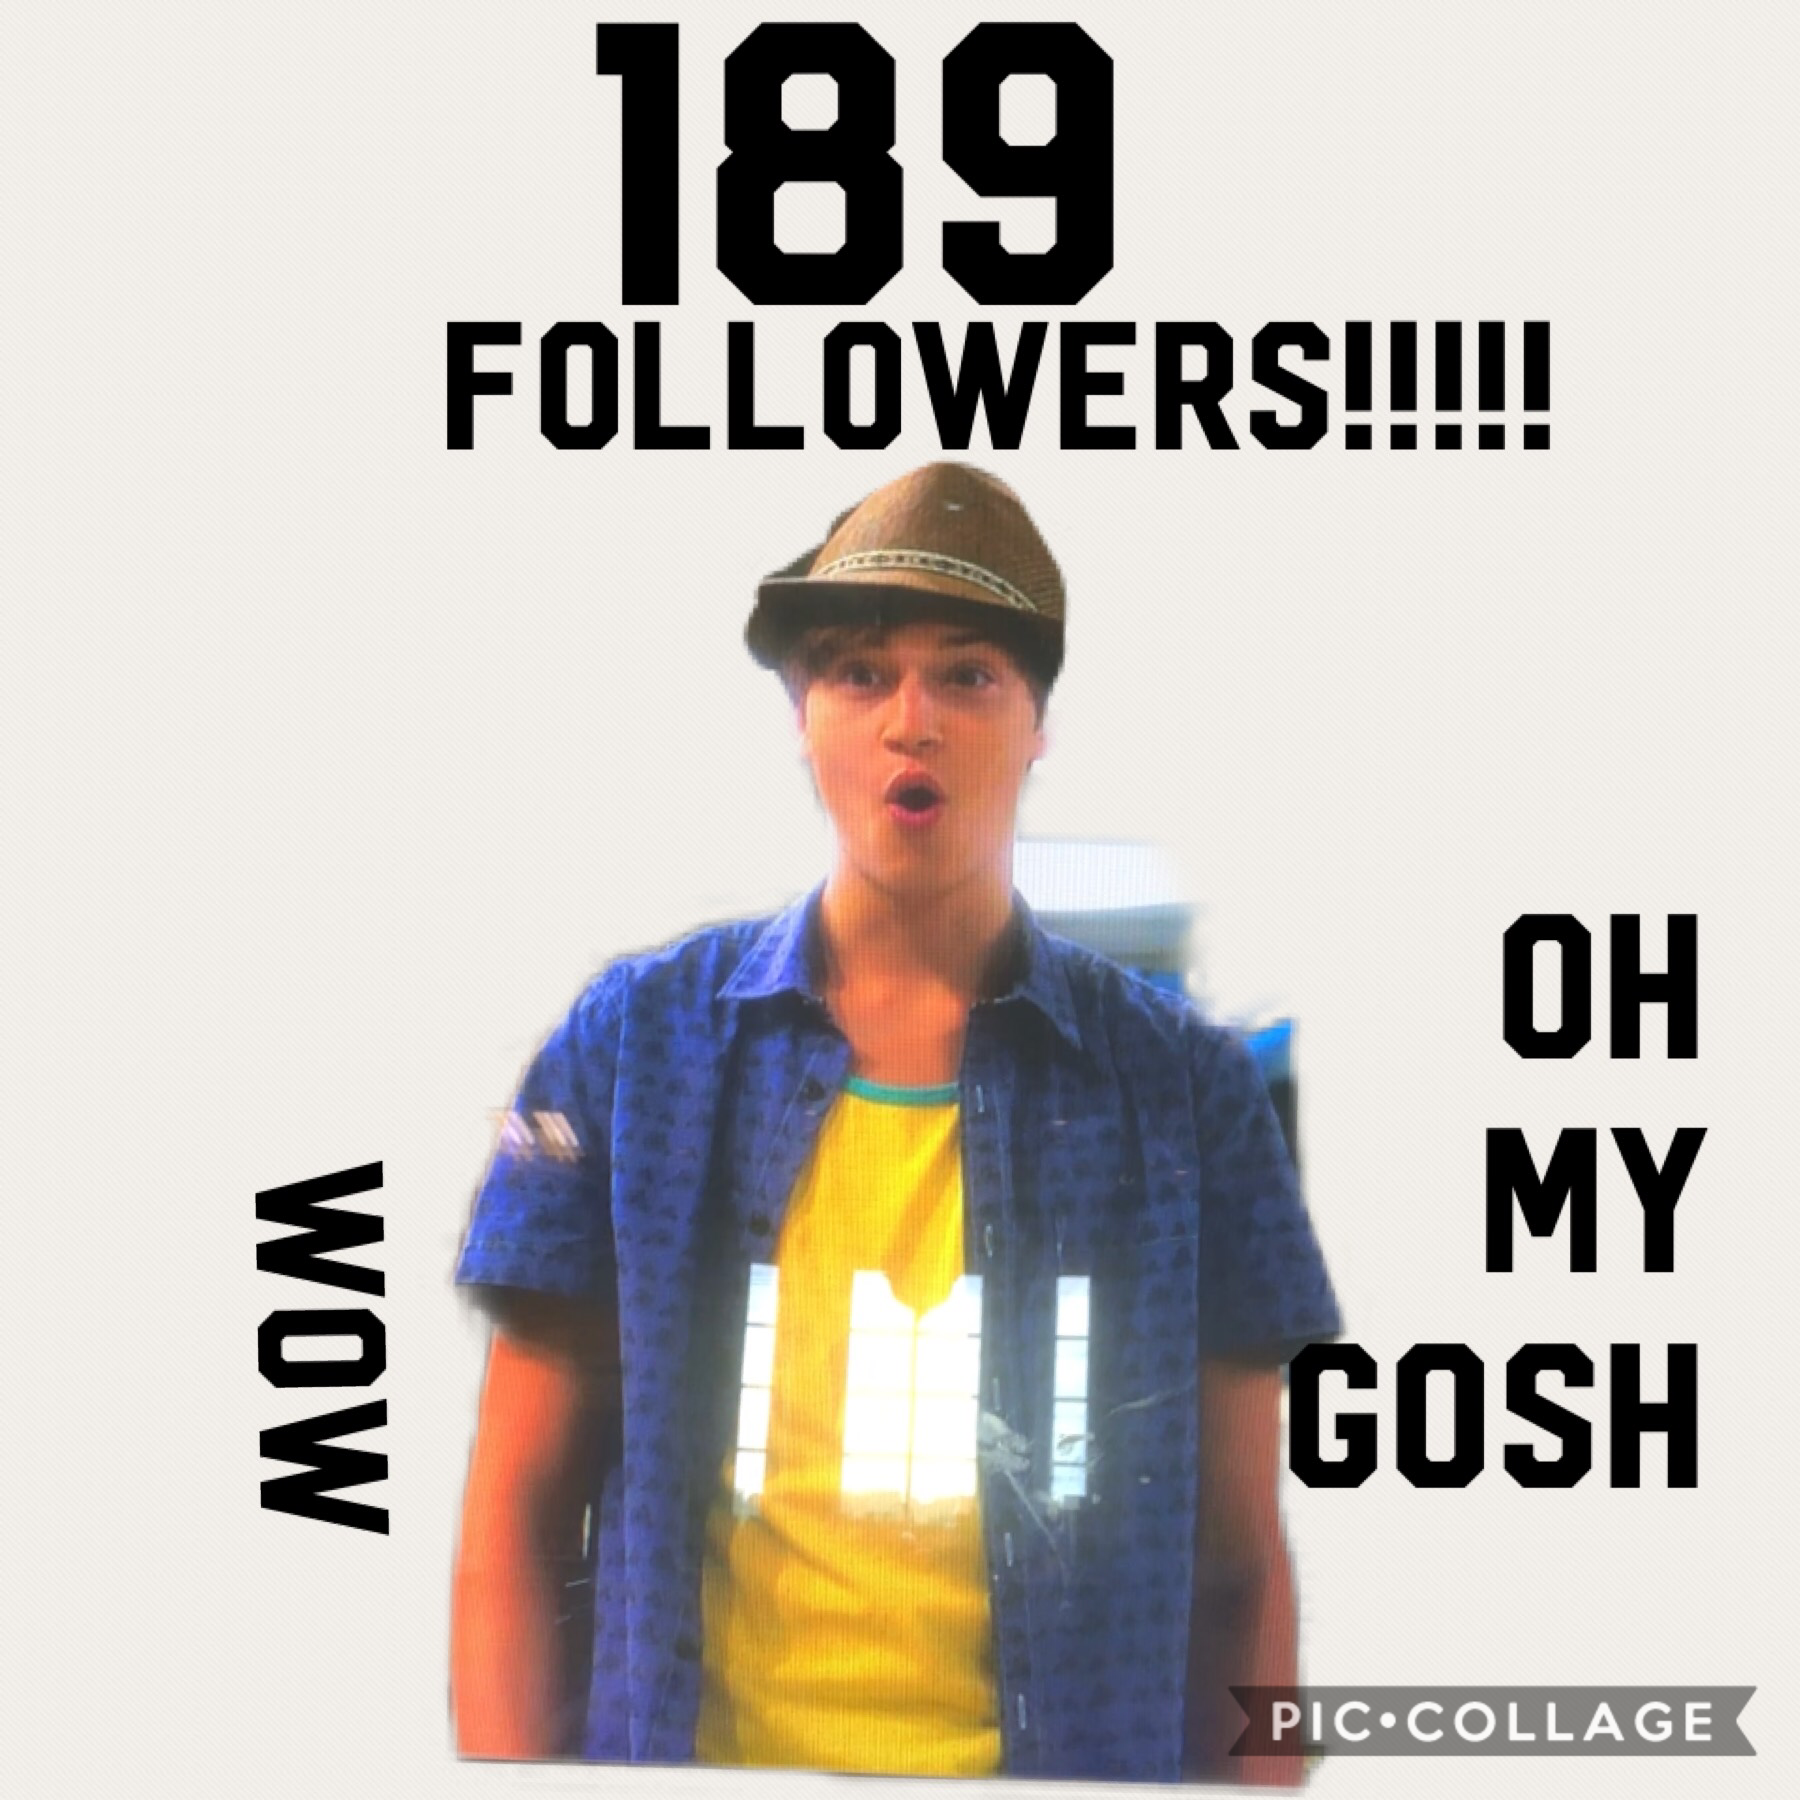 189 followers!!!!!!